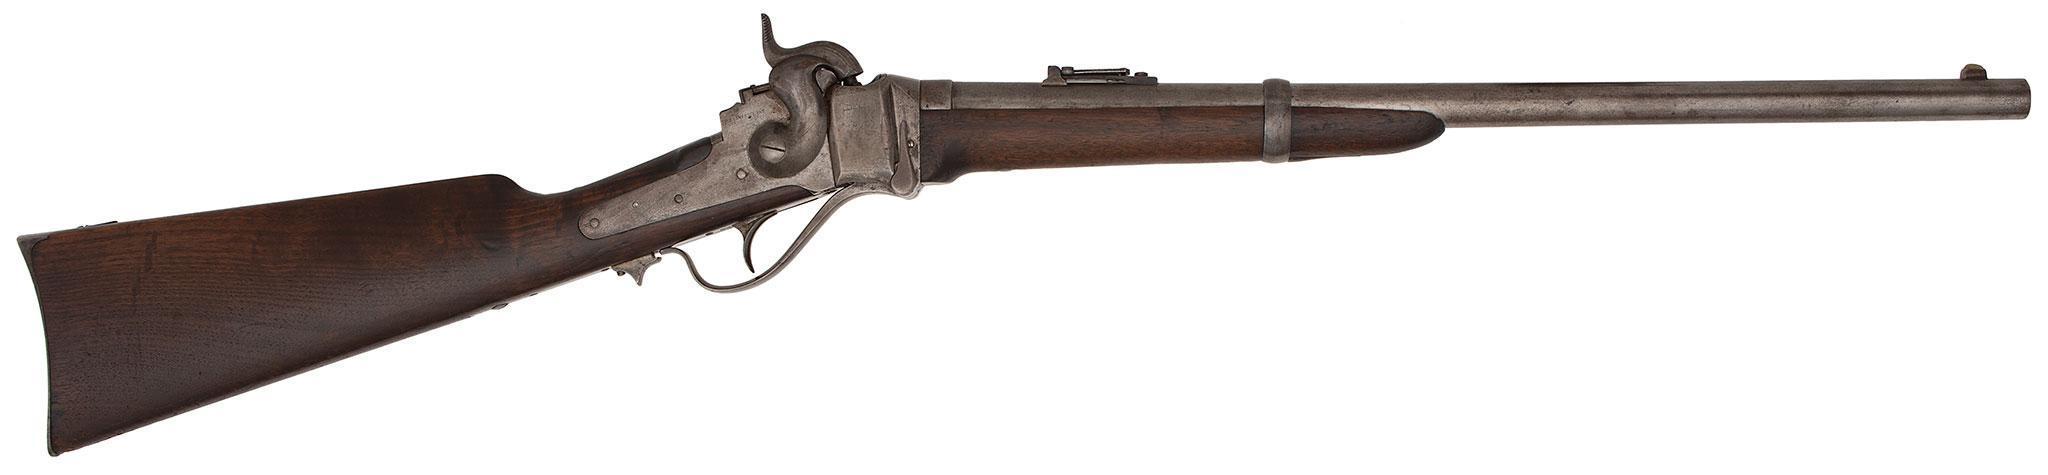 Civil War Sharps New Model 1863 Attributed To William F Cody (Buffalo Bill)